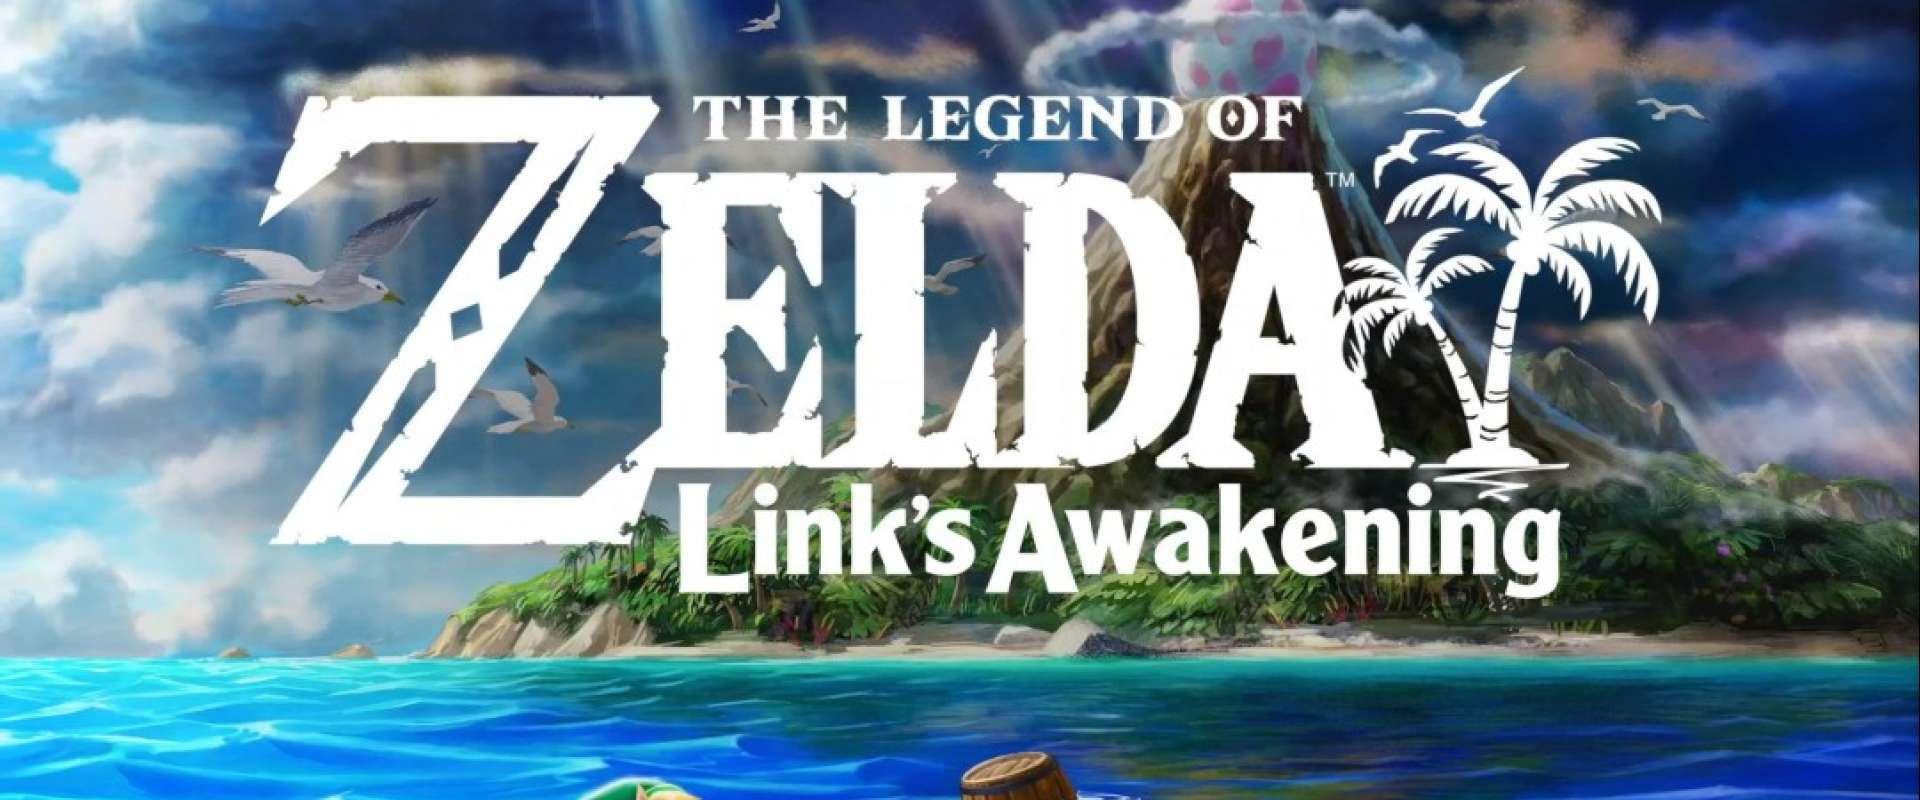 The Legend of Zelda: Link's Awakening Legendado em Portugues